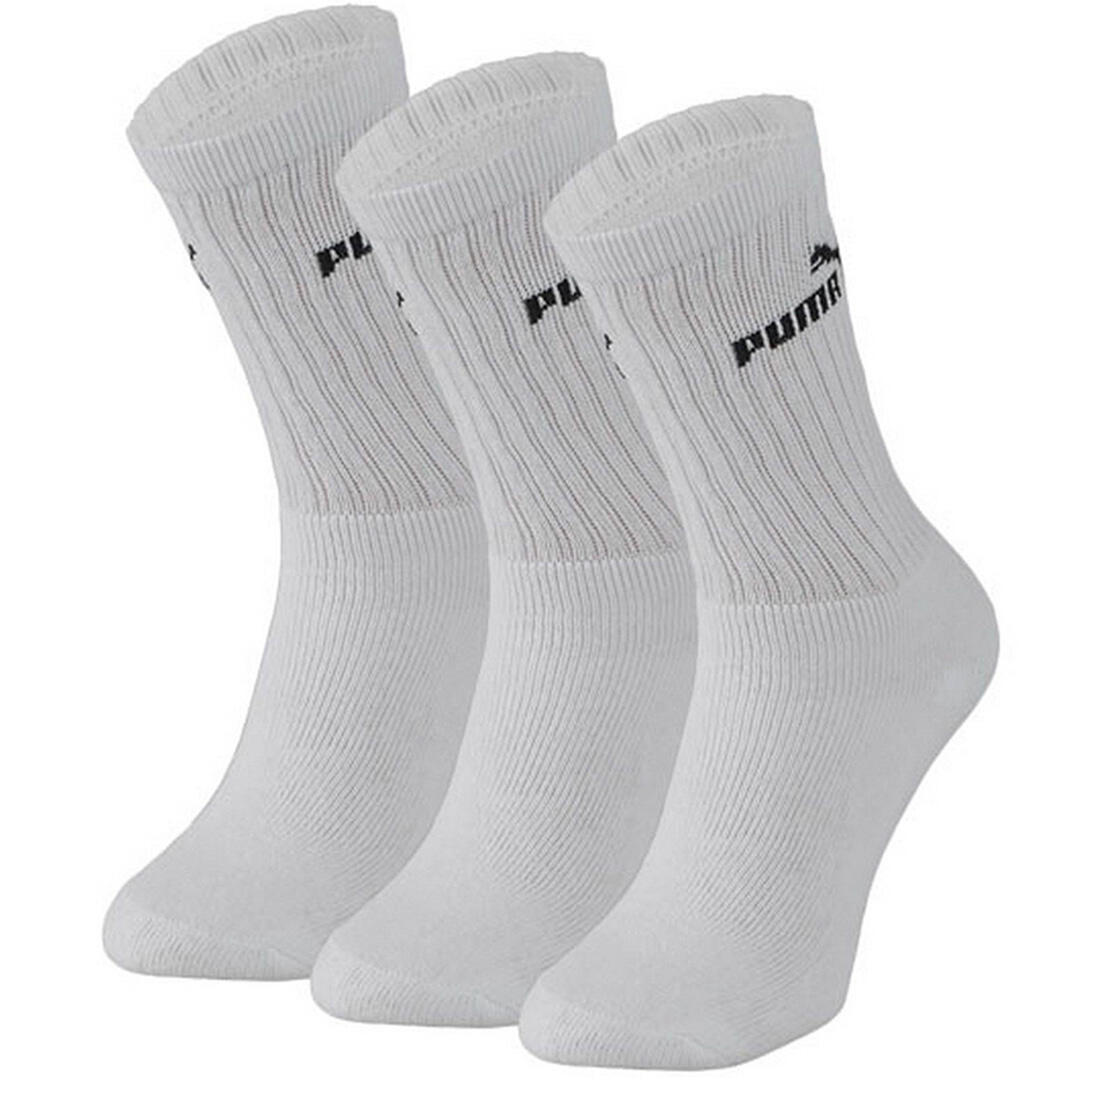 Unisex Adults Crew Socks (Pack Of 3) (Grey) 1/2